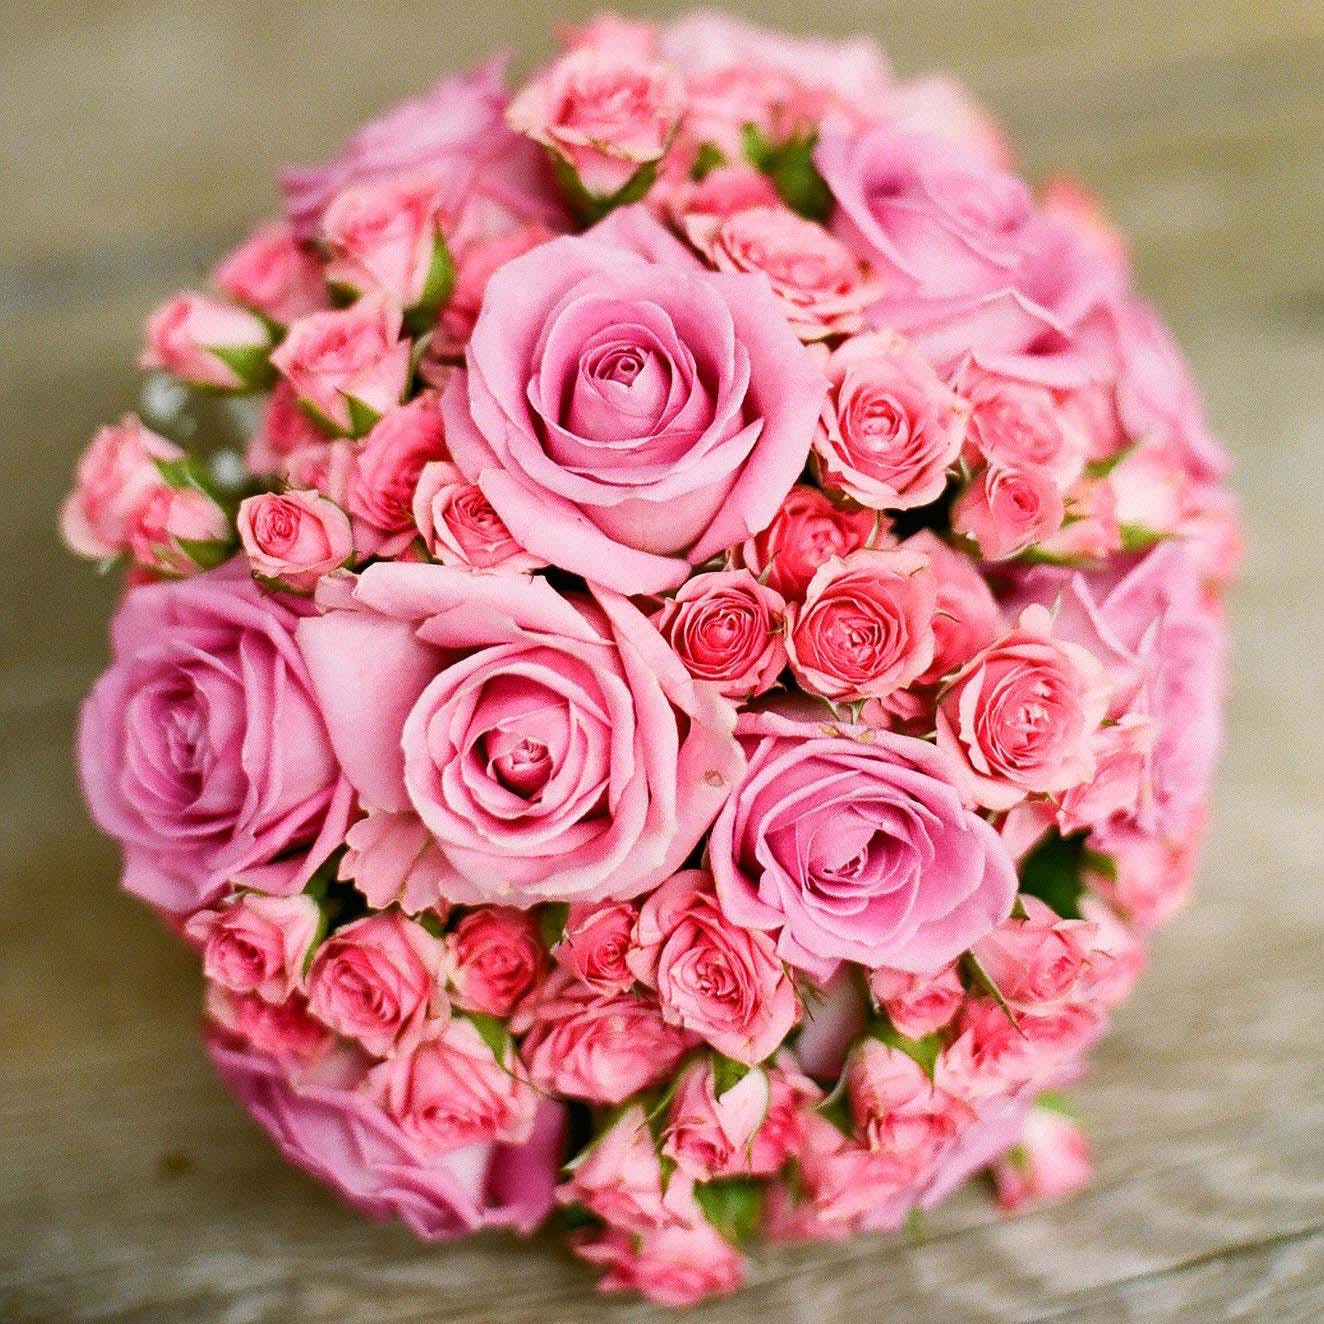 Flower,Bouquet,Garden roses,Pink,Rose,Plant,Cut flowers,Flower Arranging,Rose family,Floral design